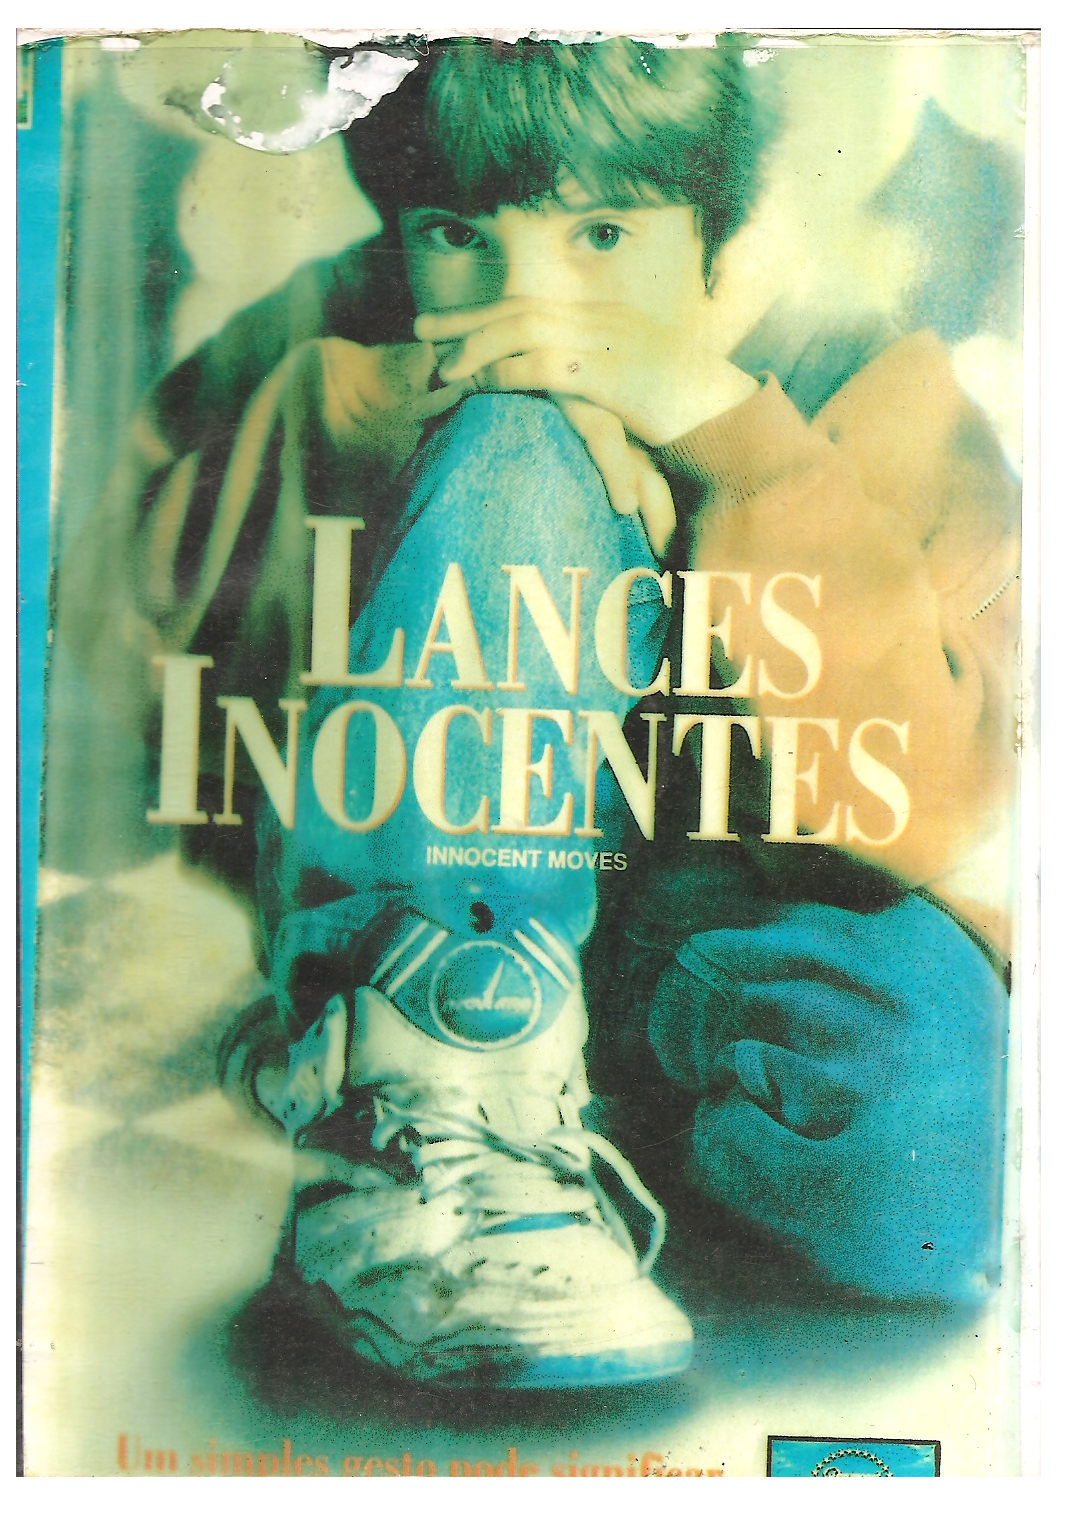 lances inocentes (1993)